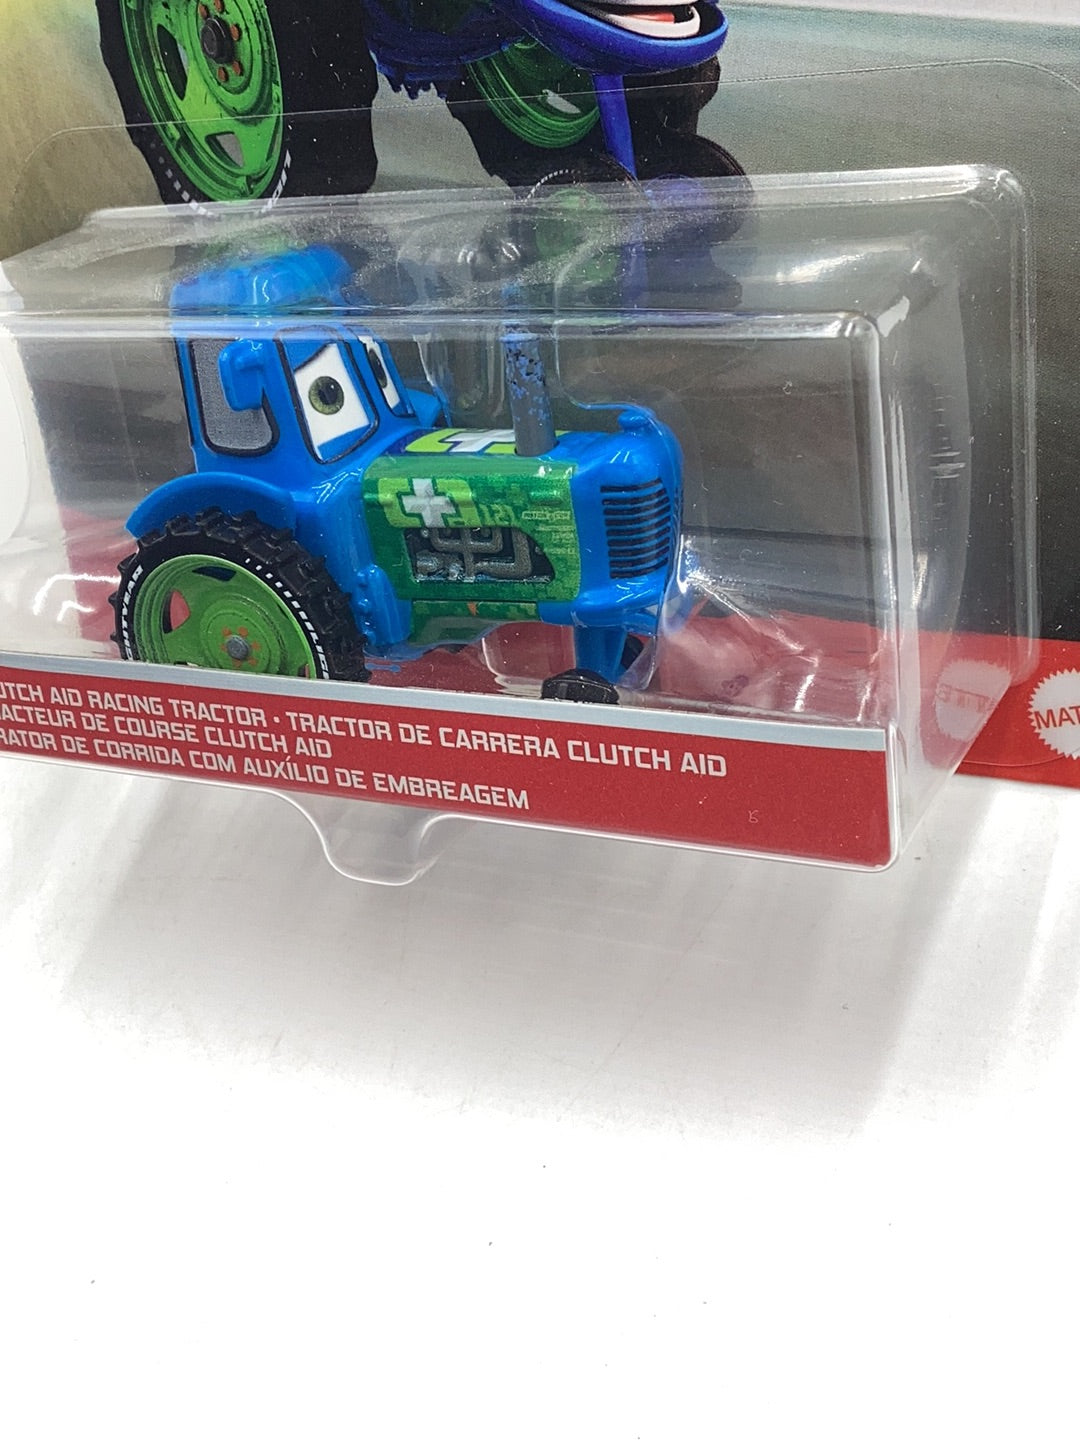 Disney Pixar Cars Clutch and Racing Tractor